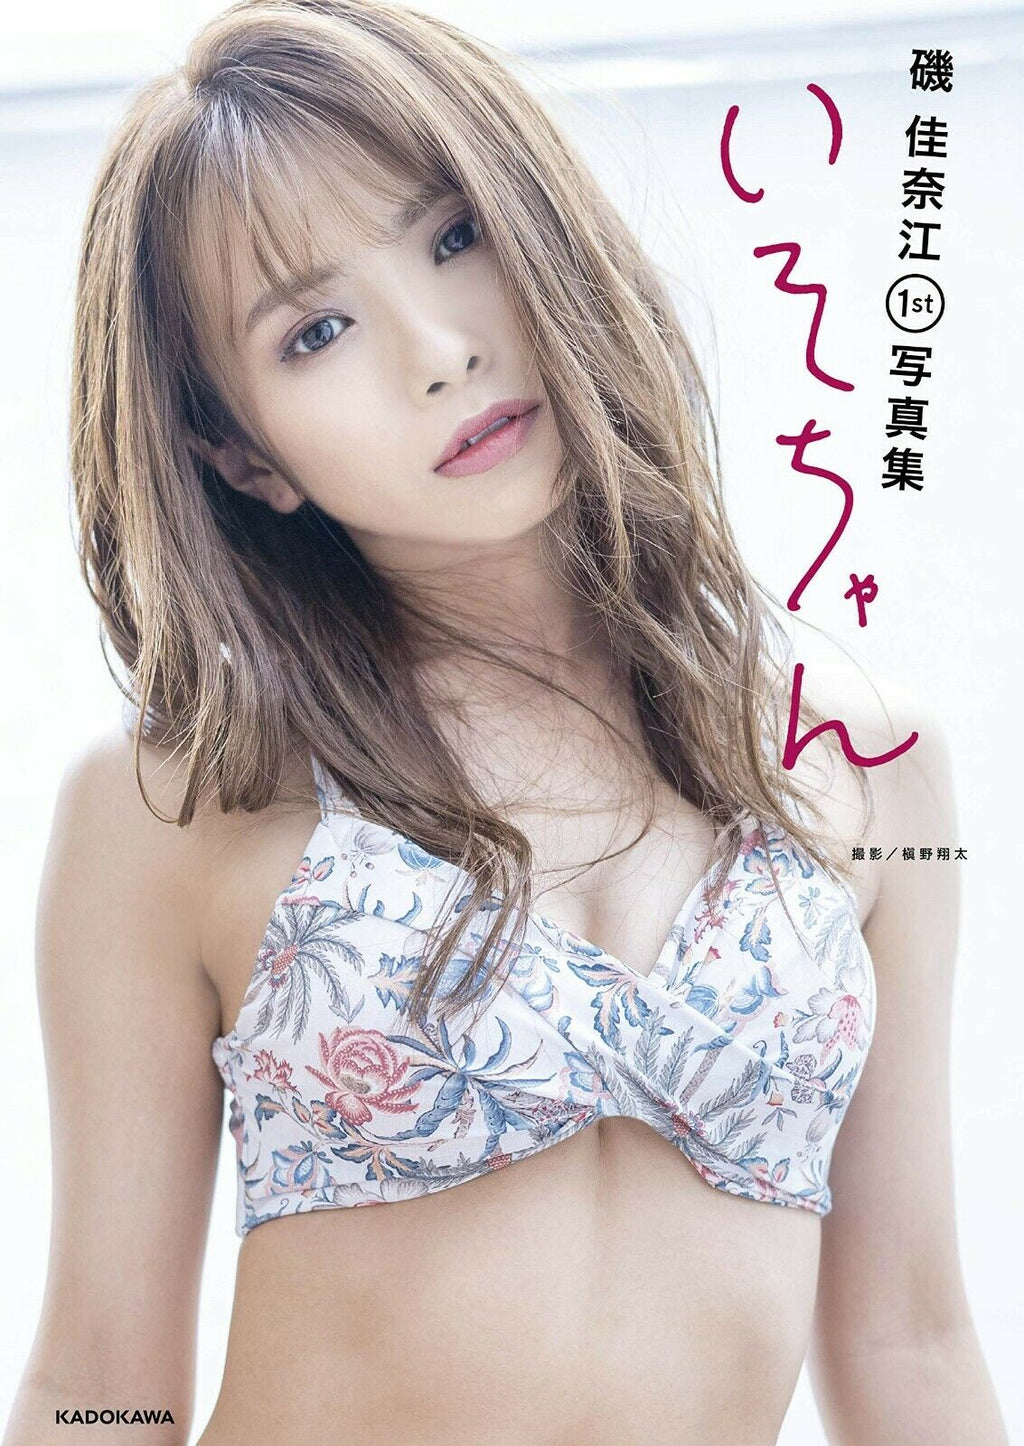 NEW' Kanae Iso 1st Photo Book | JAPAN Japanese Girls Idol NMB48